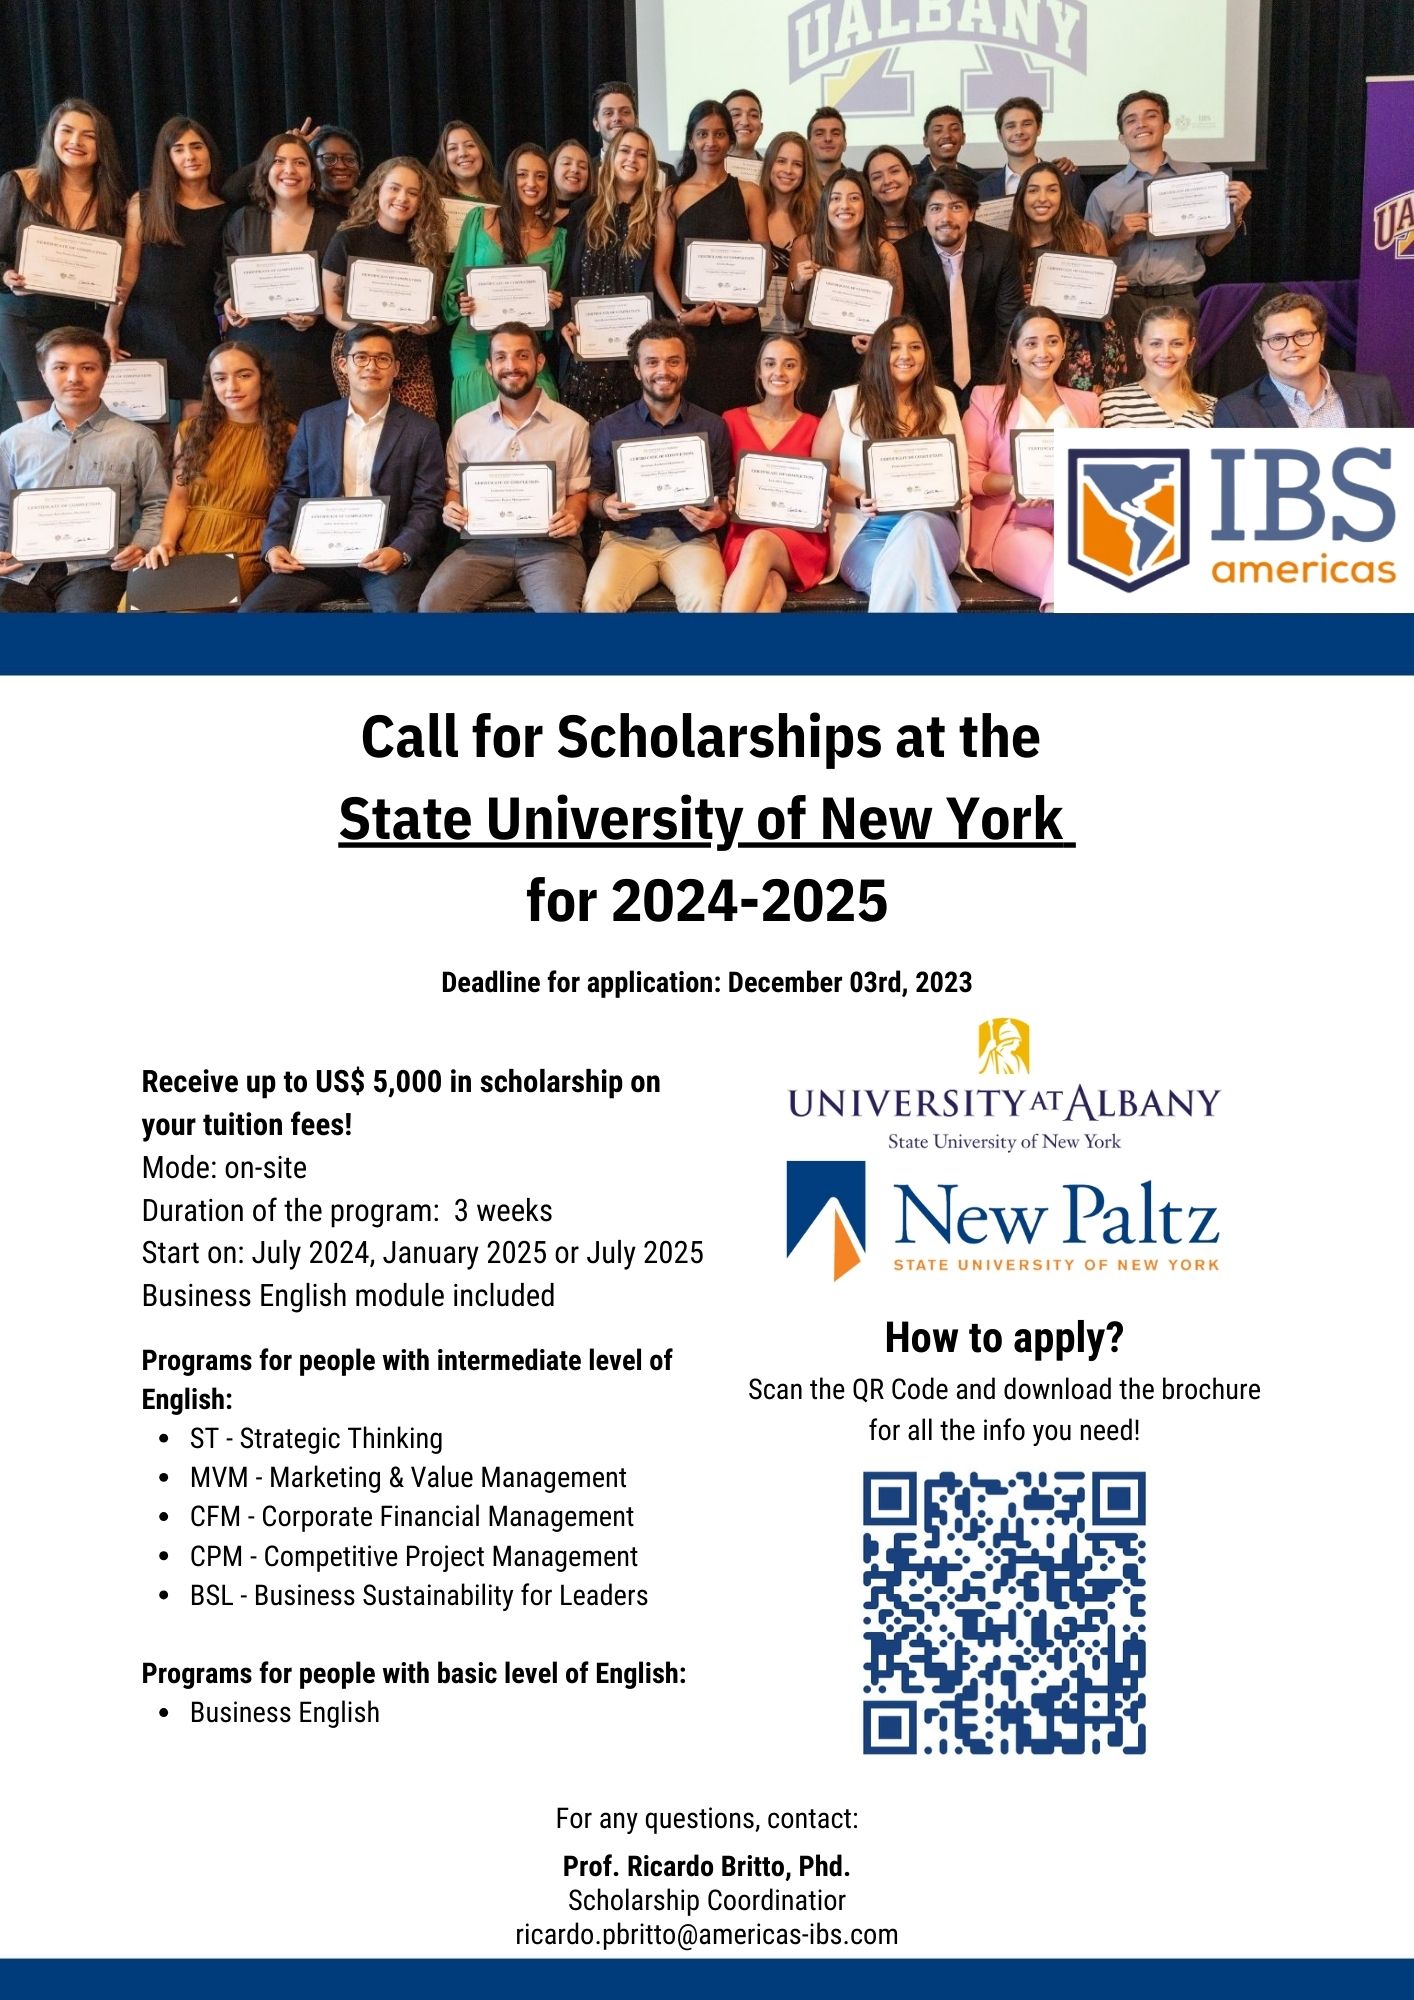 Scholarships at State University of New York (2024-2025)